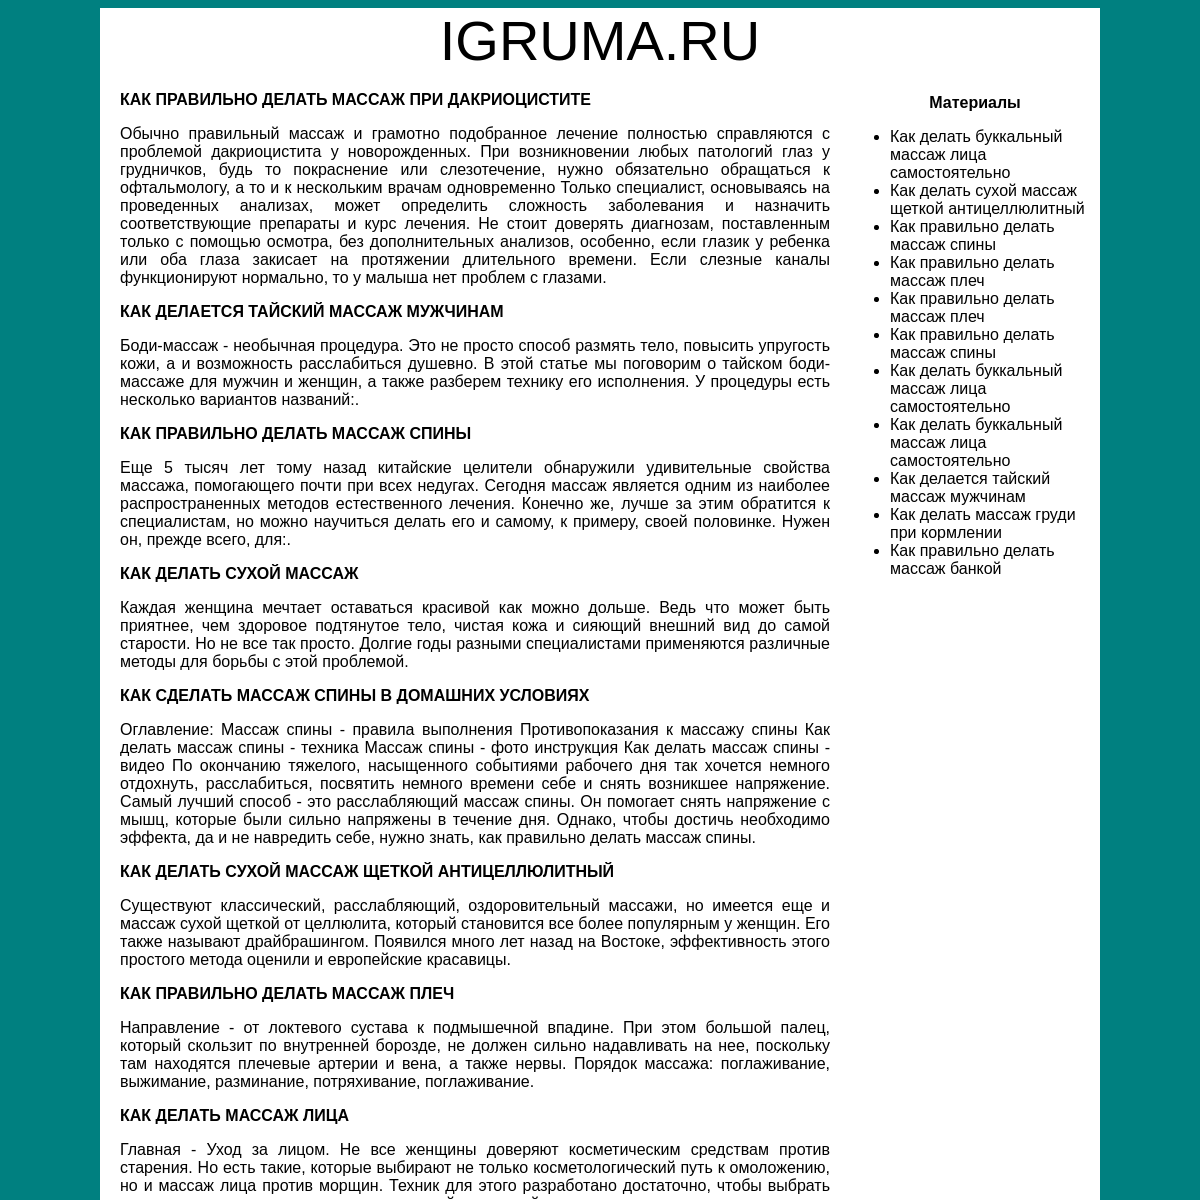 A complete backup of igruma.ru